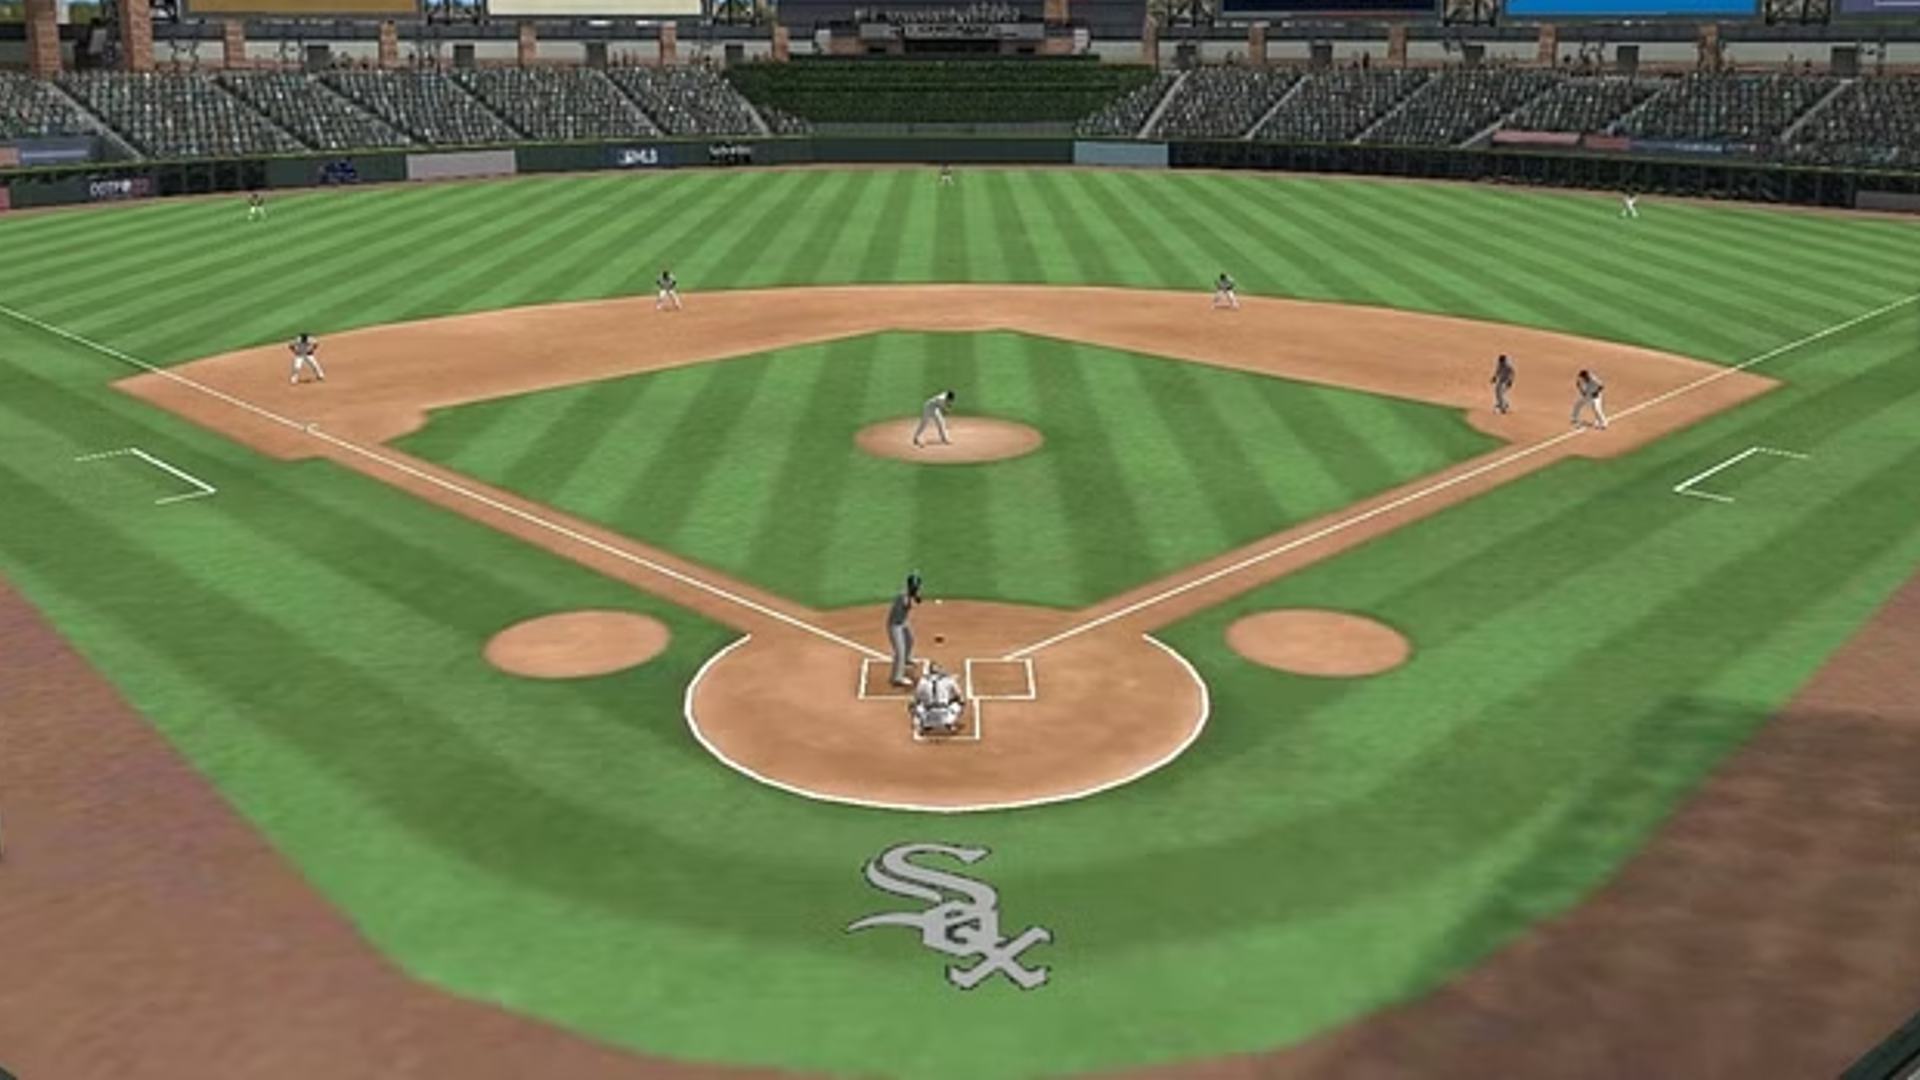 Best Sports Games: A baseball field can be seen